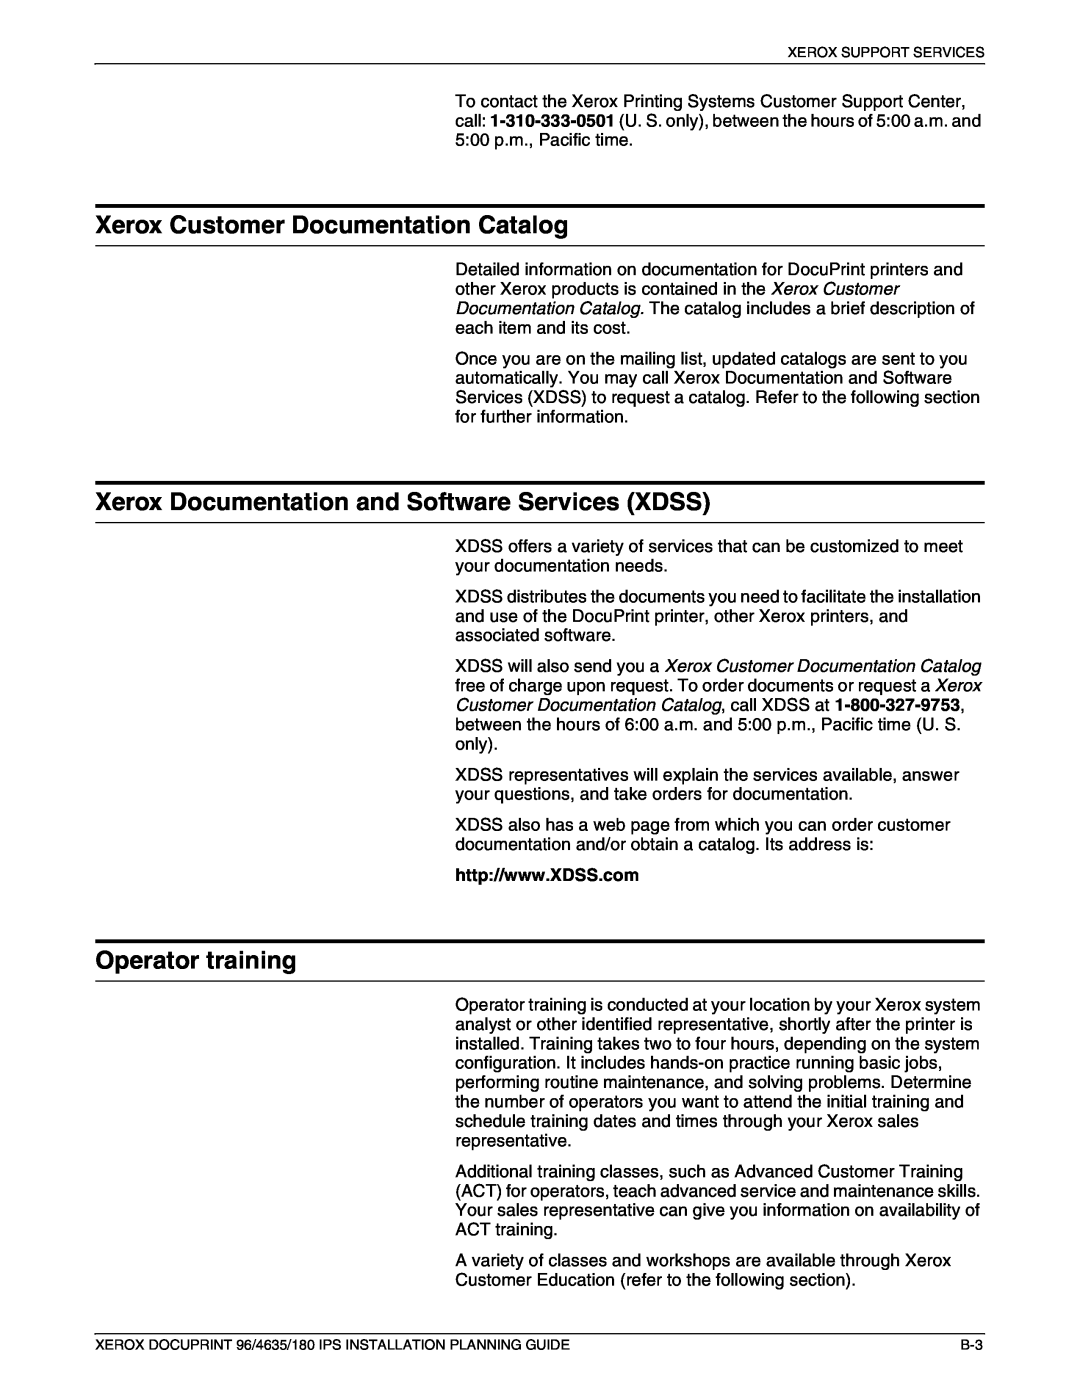 Xerox 180 IPS Xerox Customer Documentation Catalog, Xerox Documentation and Software Services XDSS, Operator training 